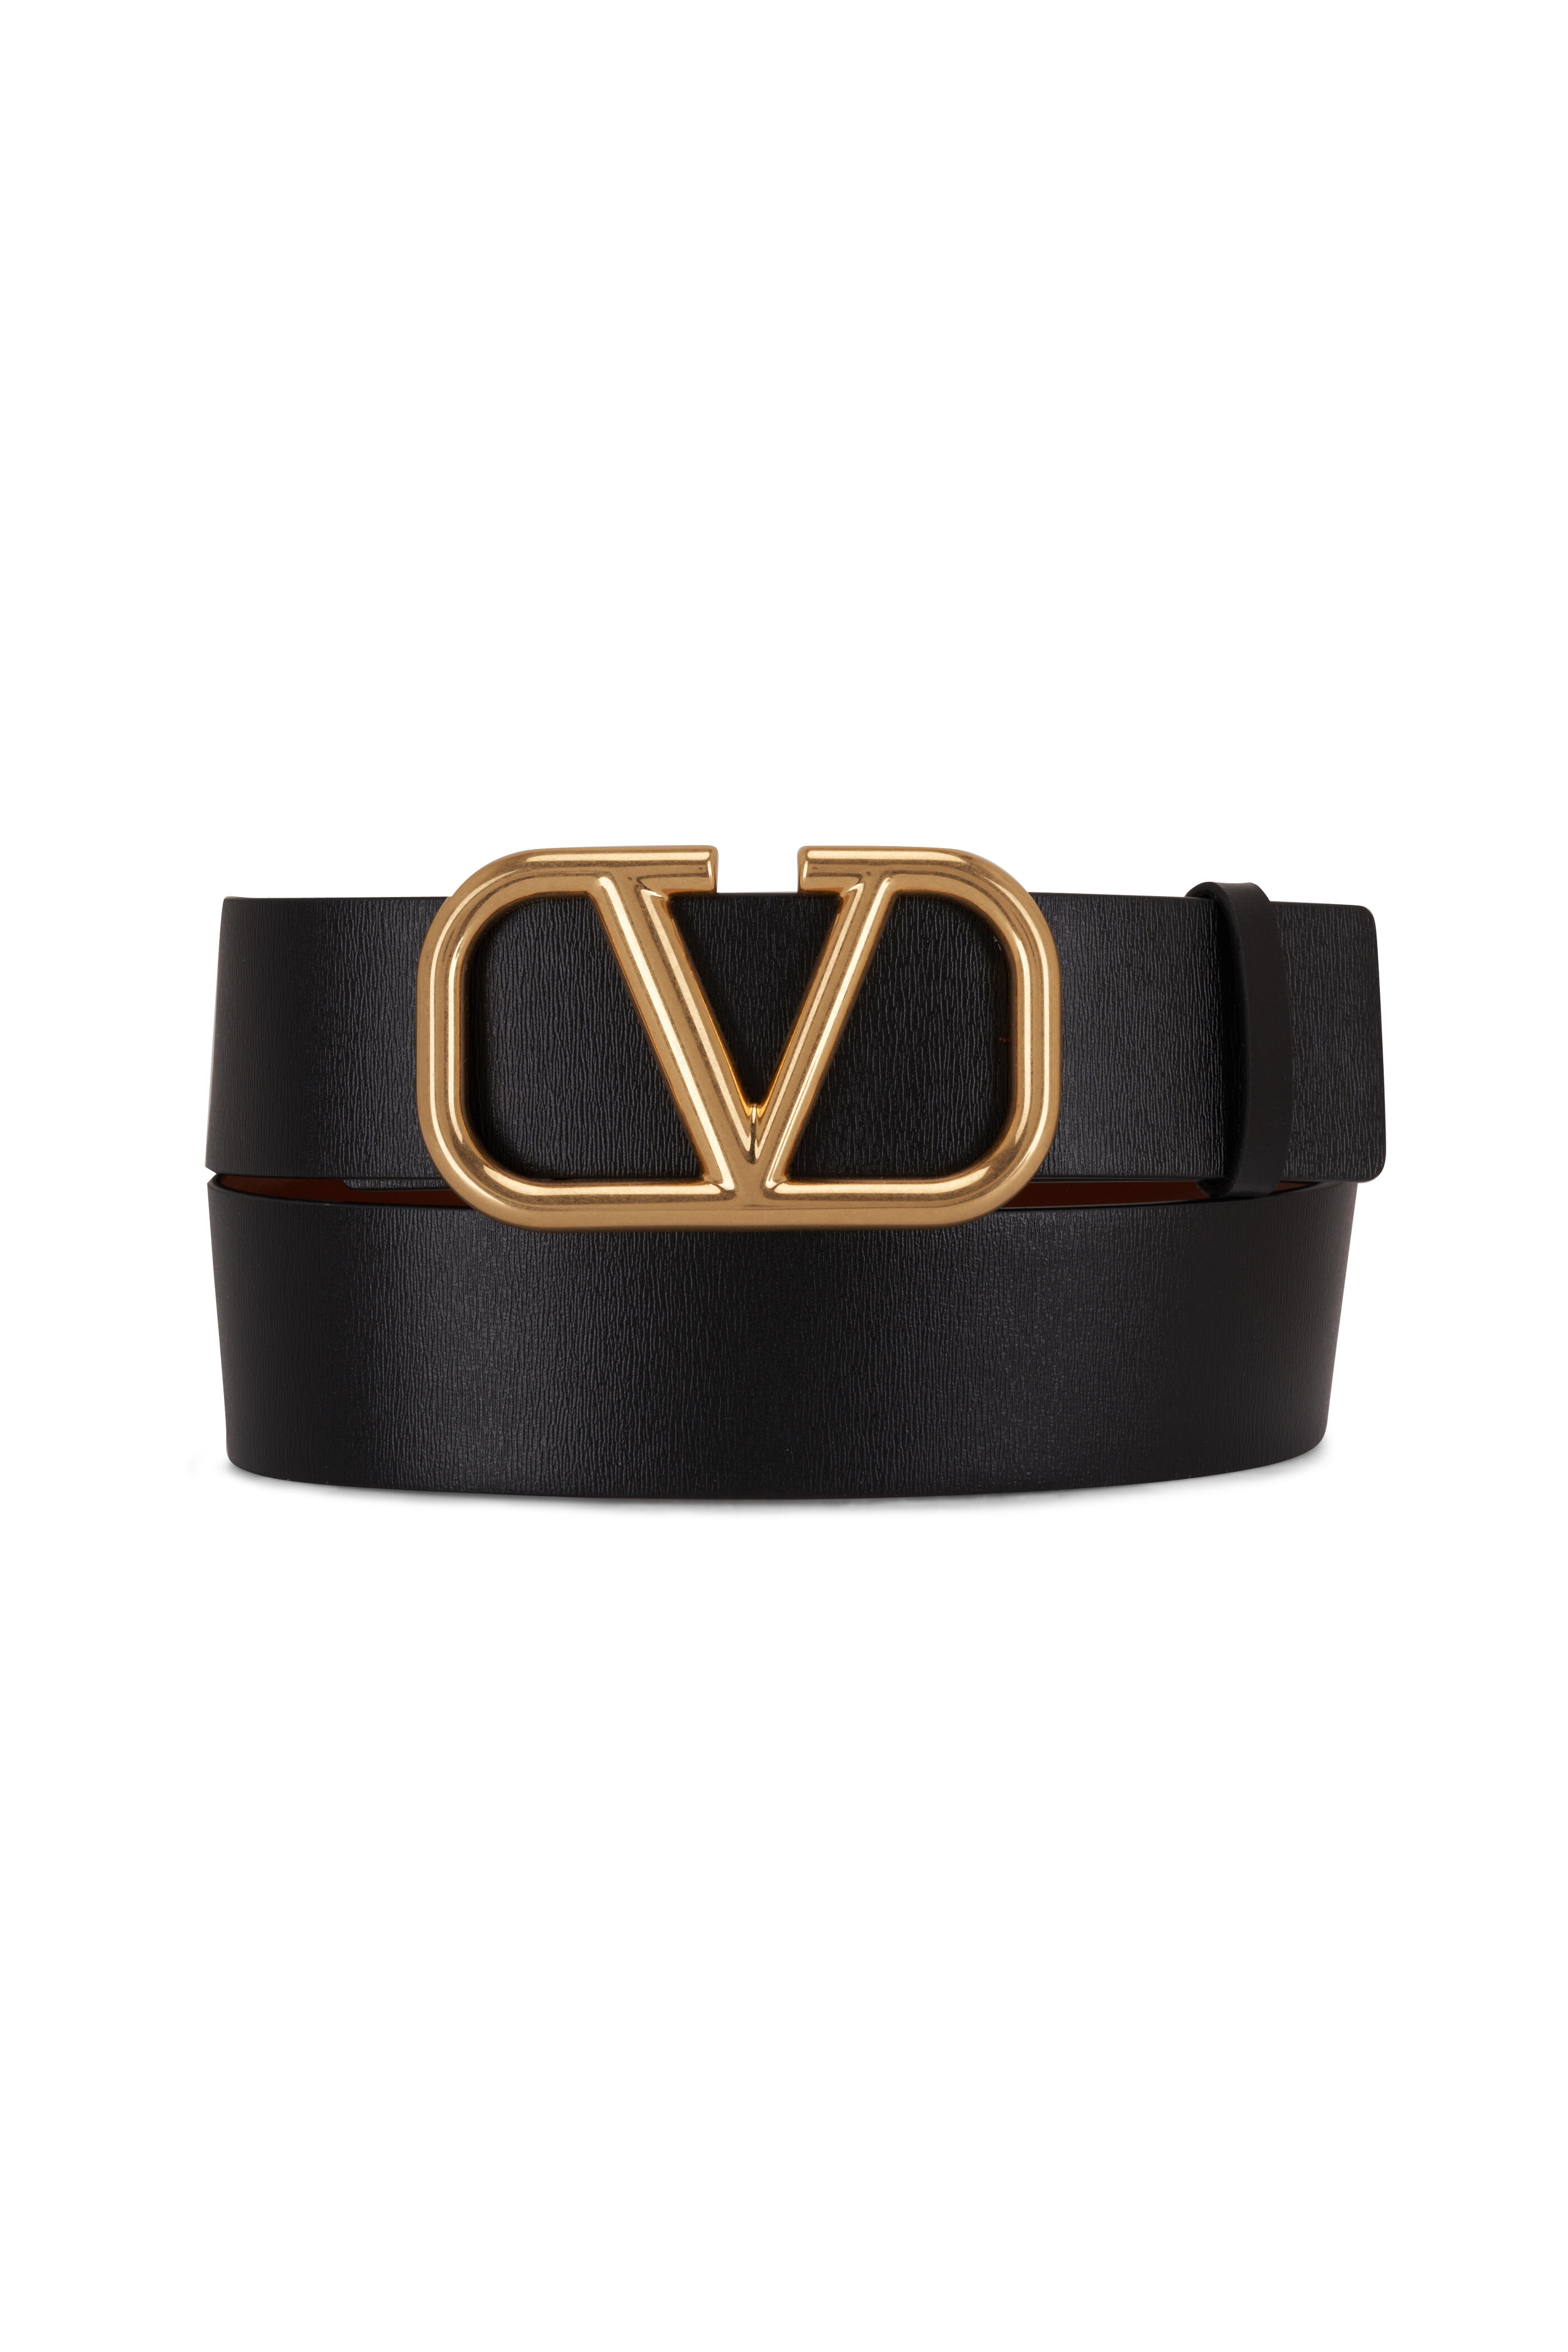 Valentino Garavani 30 V Logo Signature Belt in Brown - Size 65